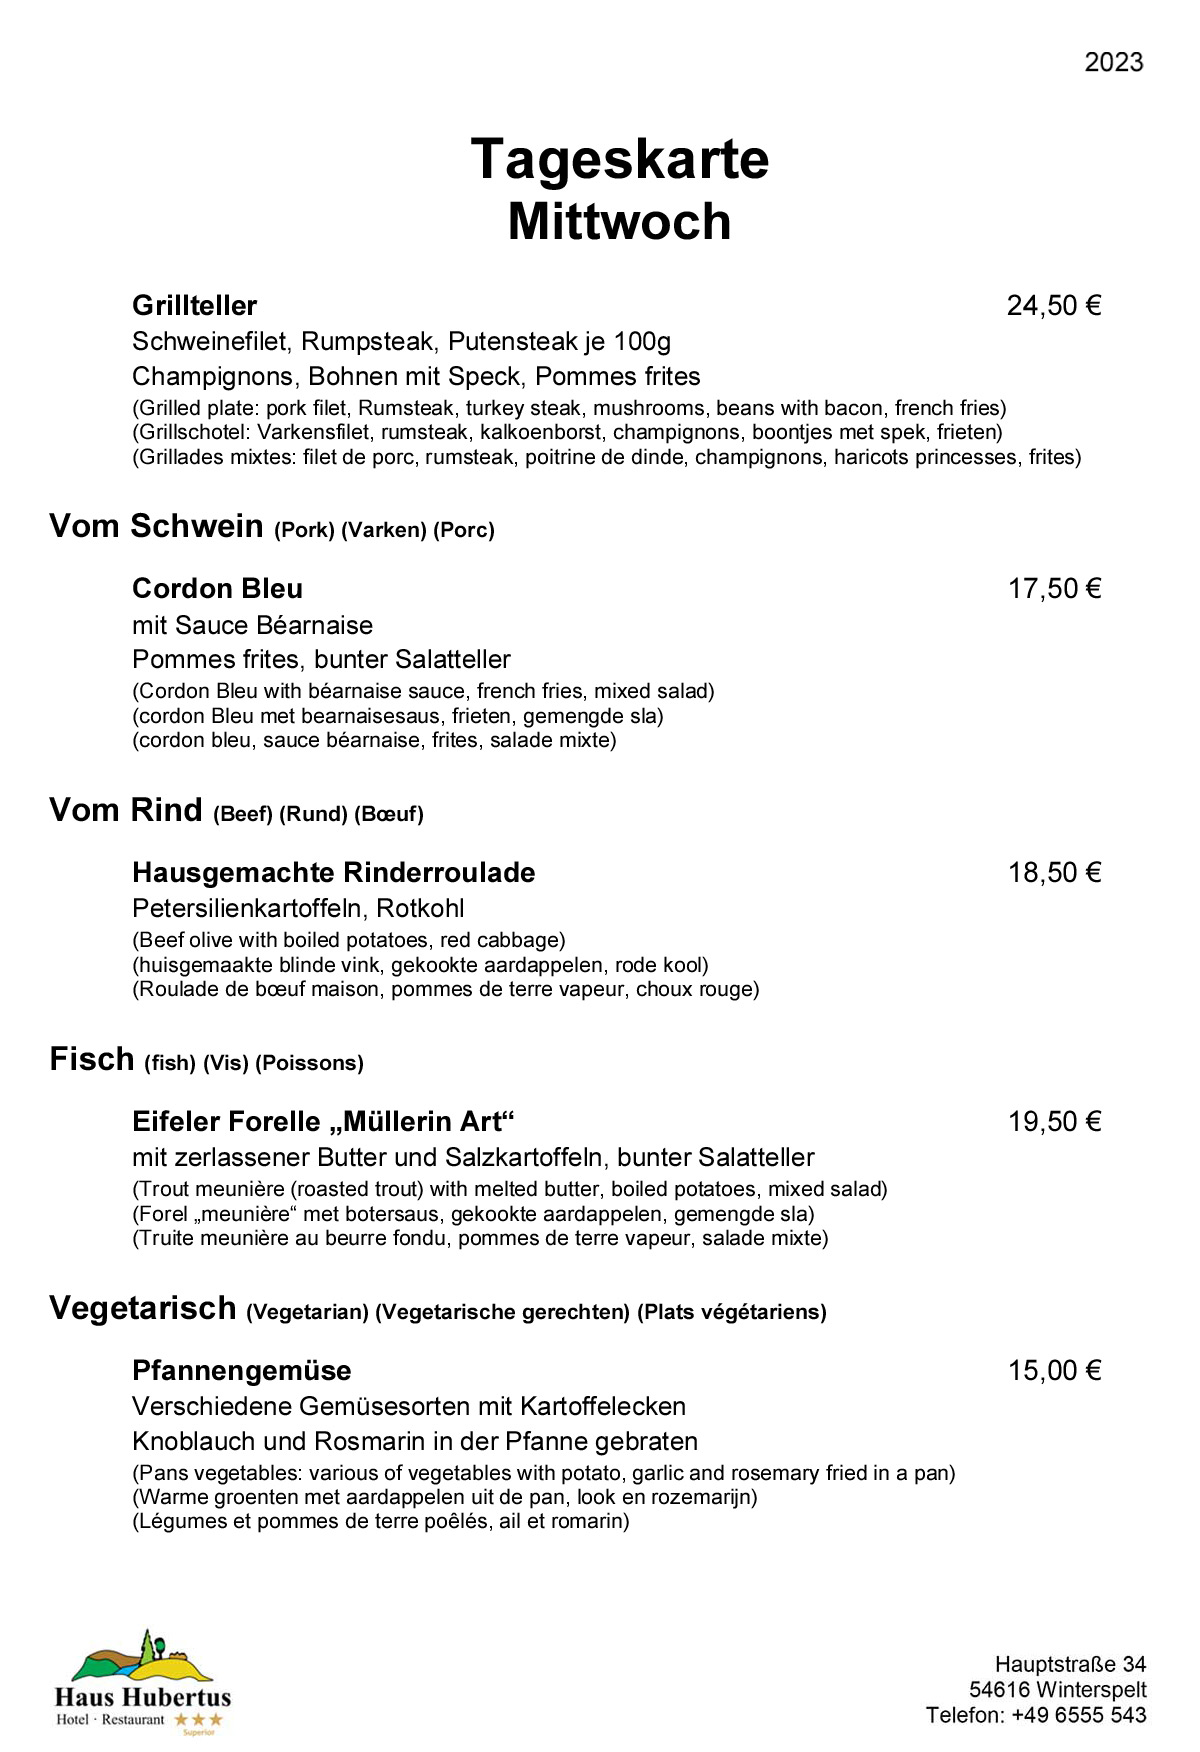 Hotel - Restaurant Haus Hubertus - Speisekarte 02/2023 - Tageskarte / Mittwoch